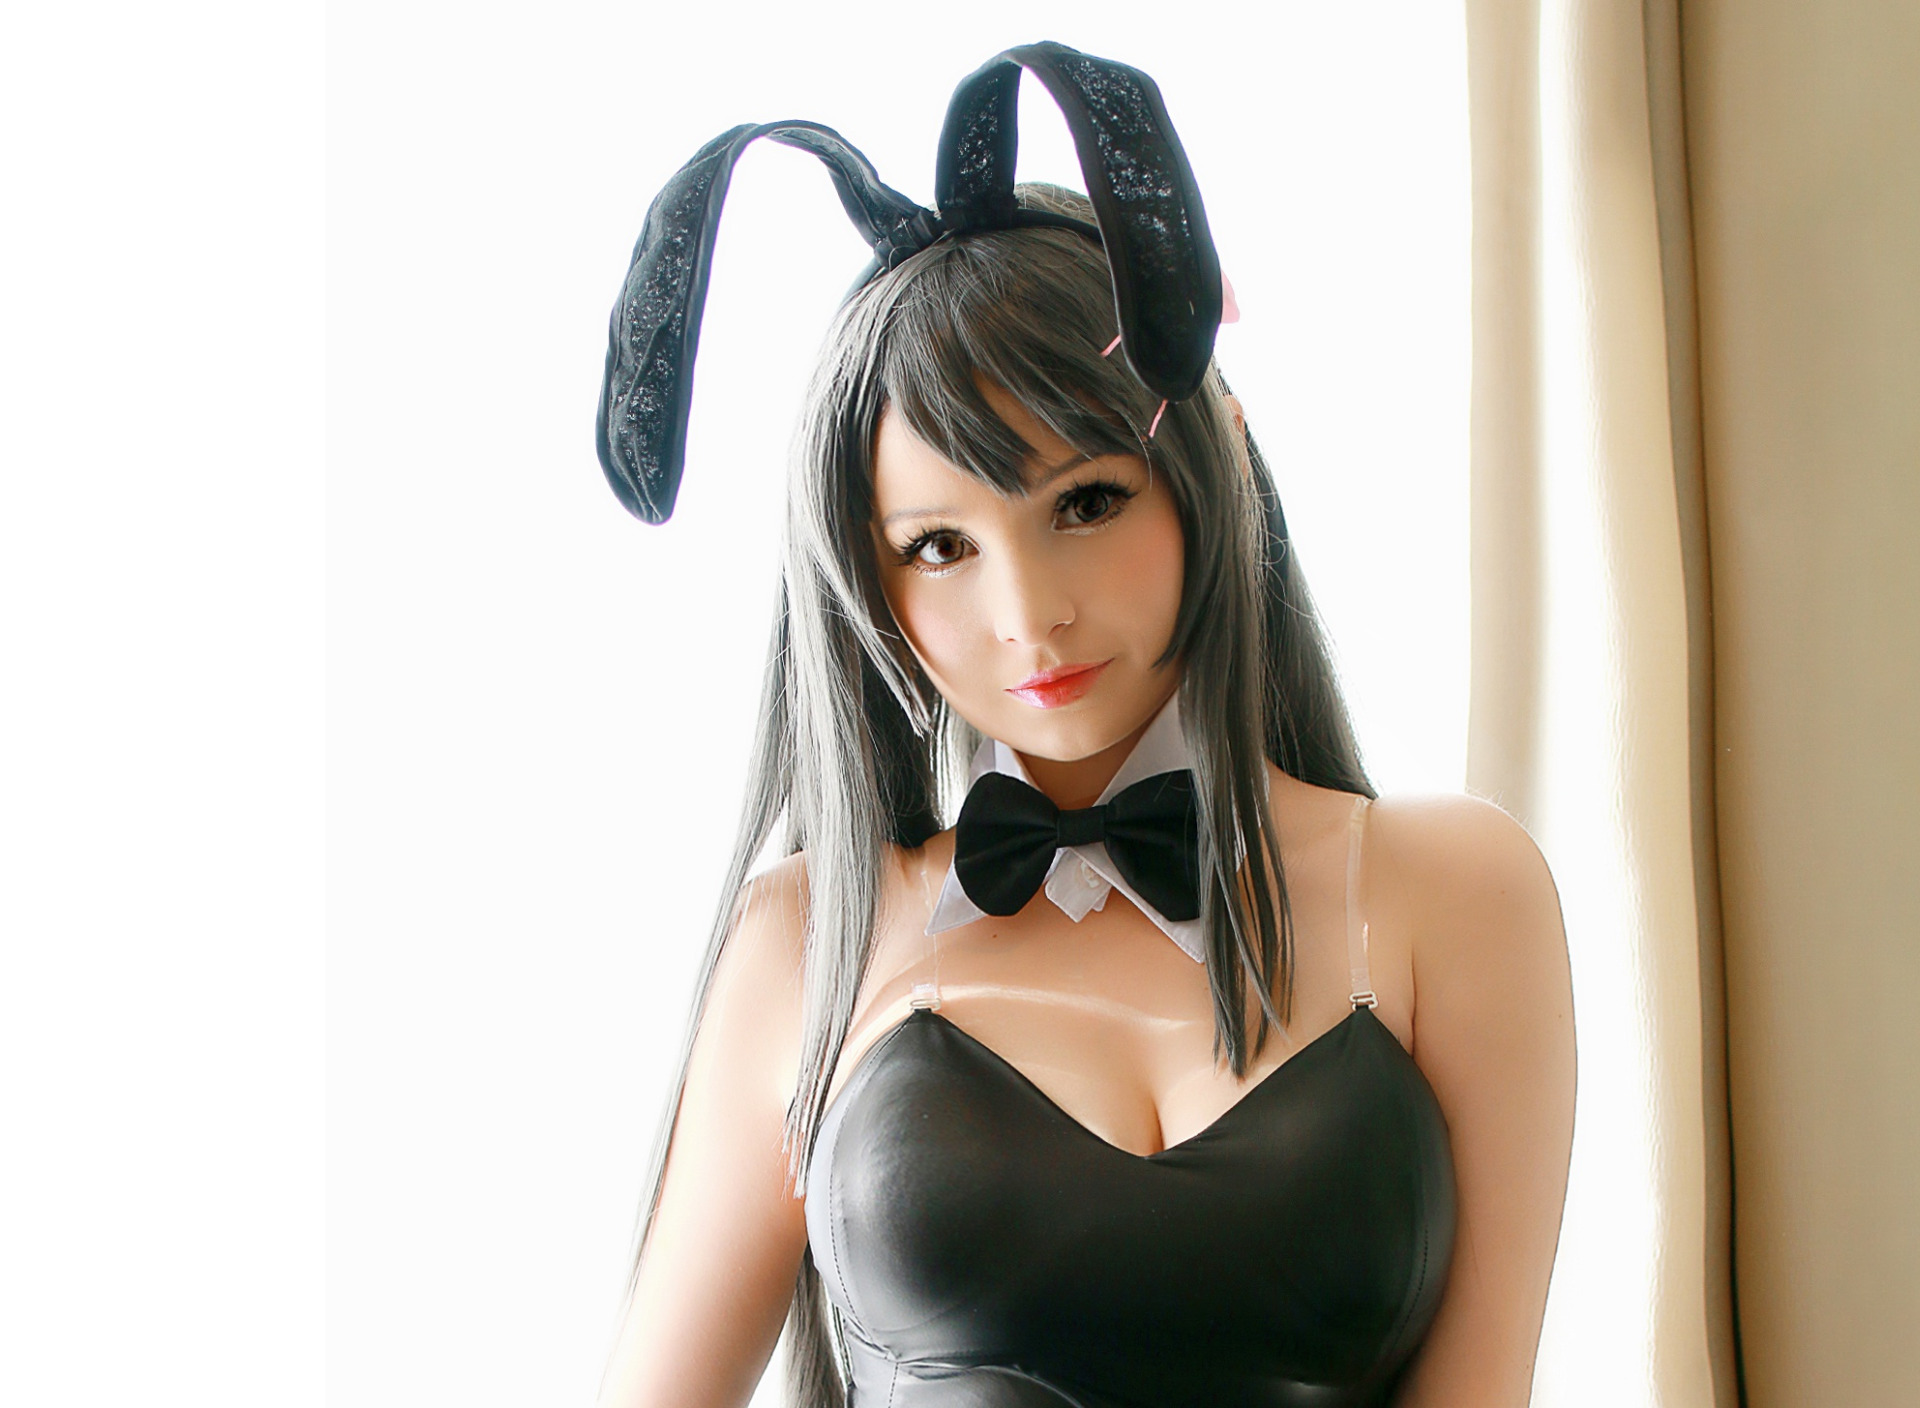 Japanese bunny girl devours huge